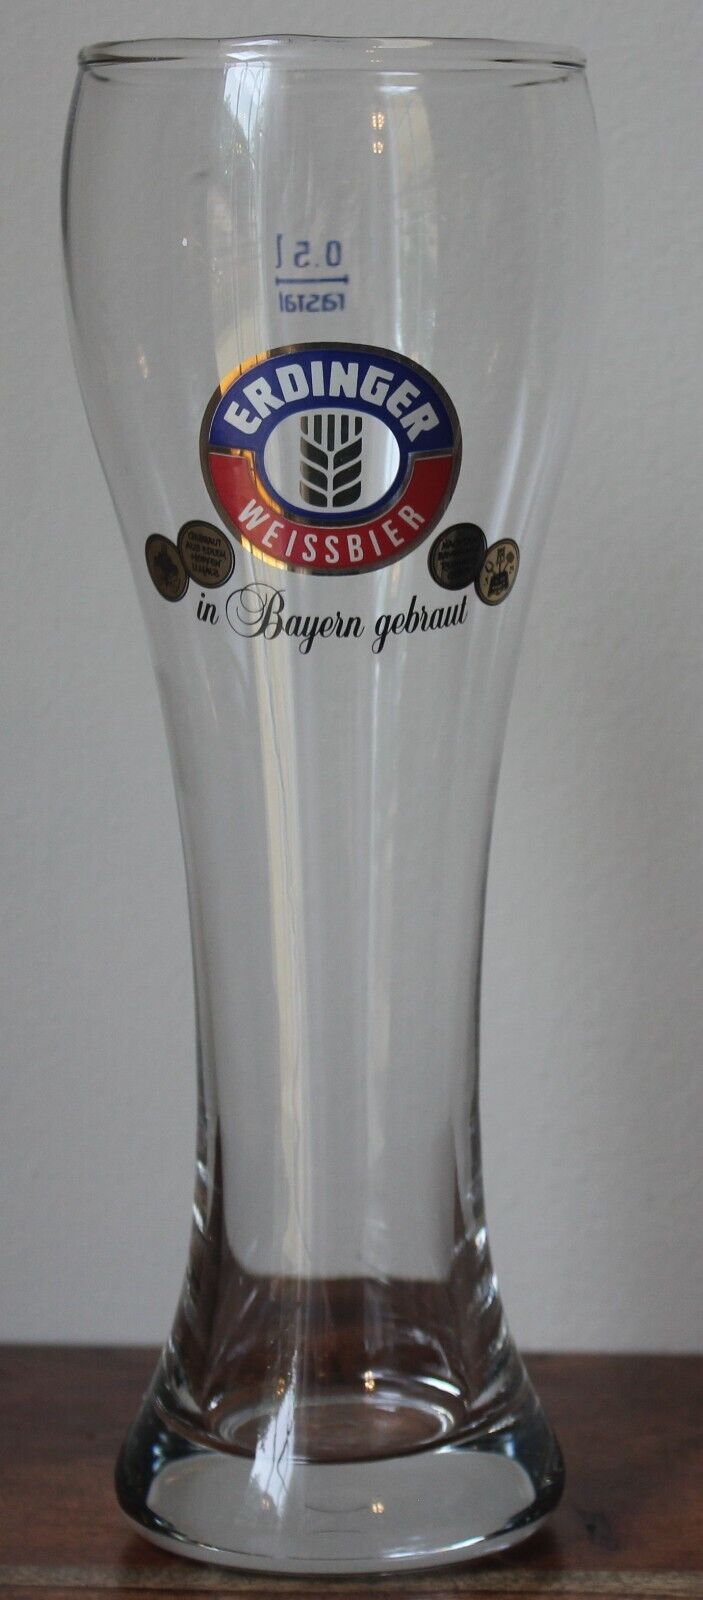 	Erdinger Weissbier In Bayern Gebraut 0.5l Tall German Beer Glass